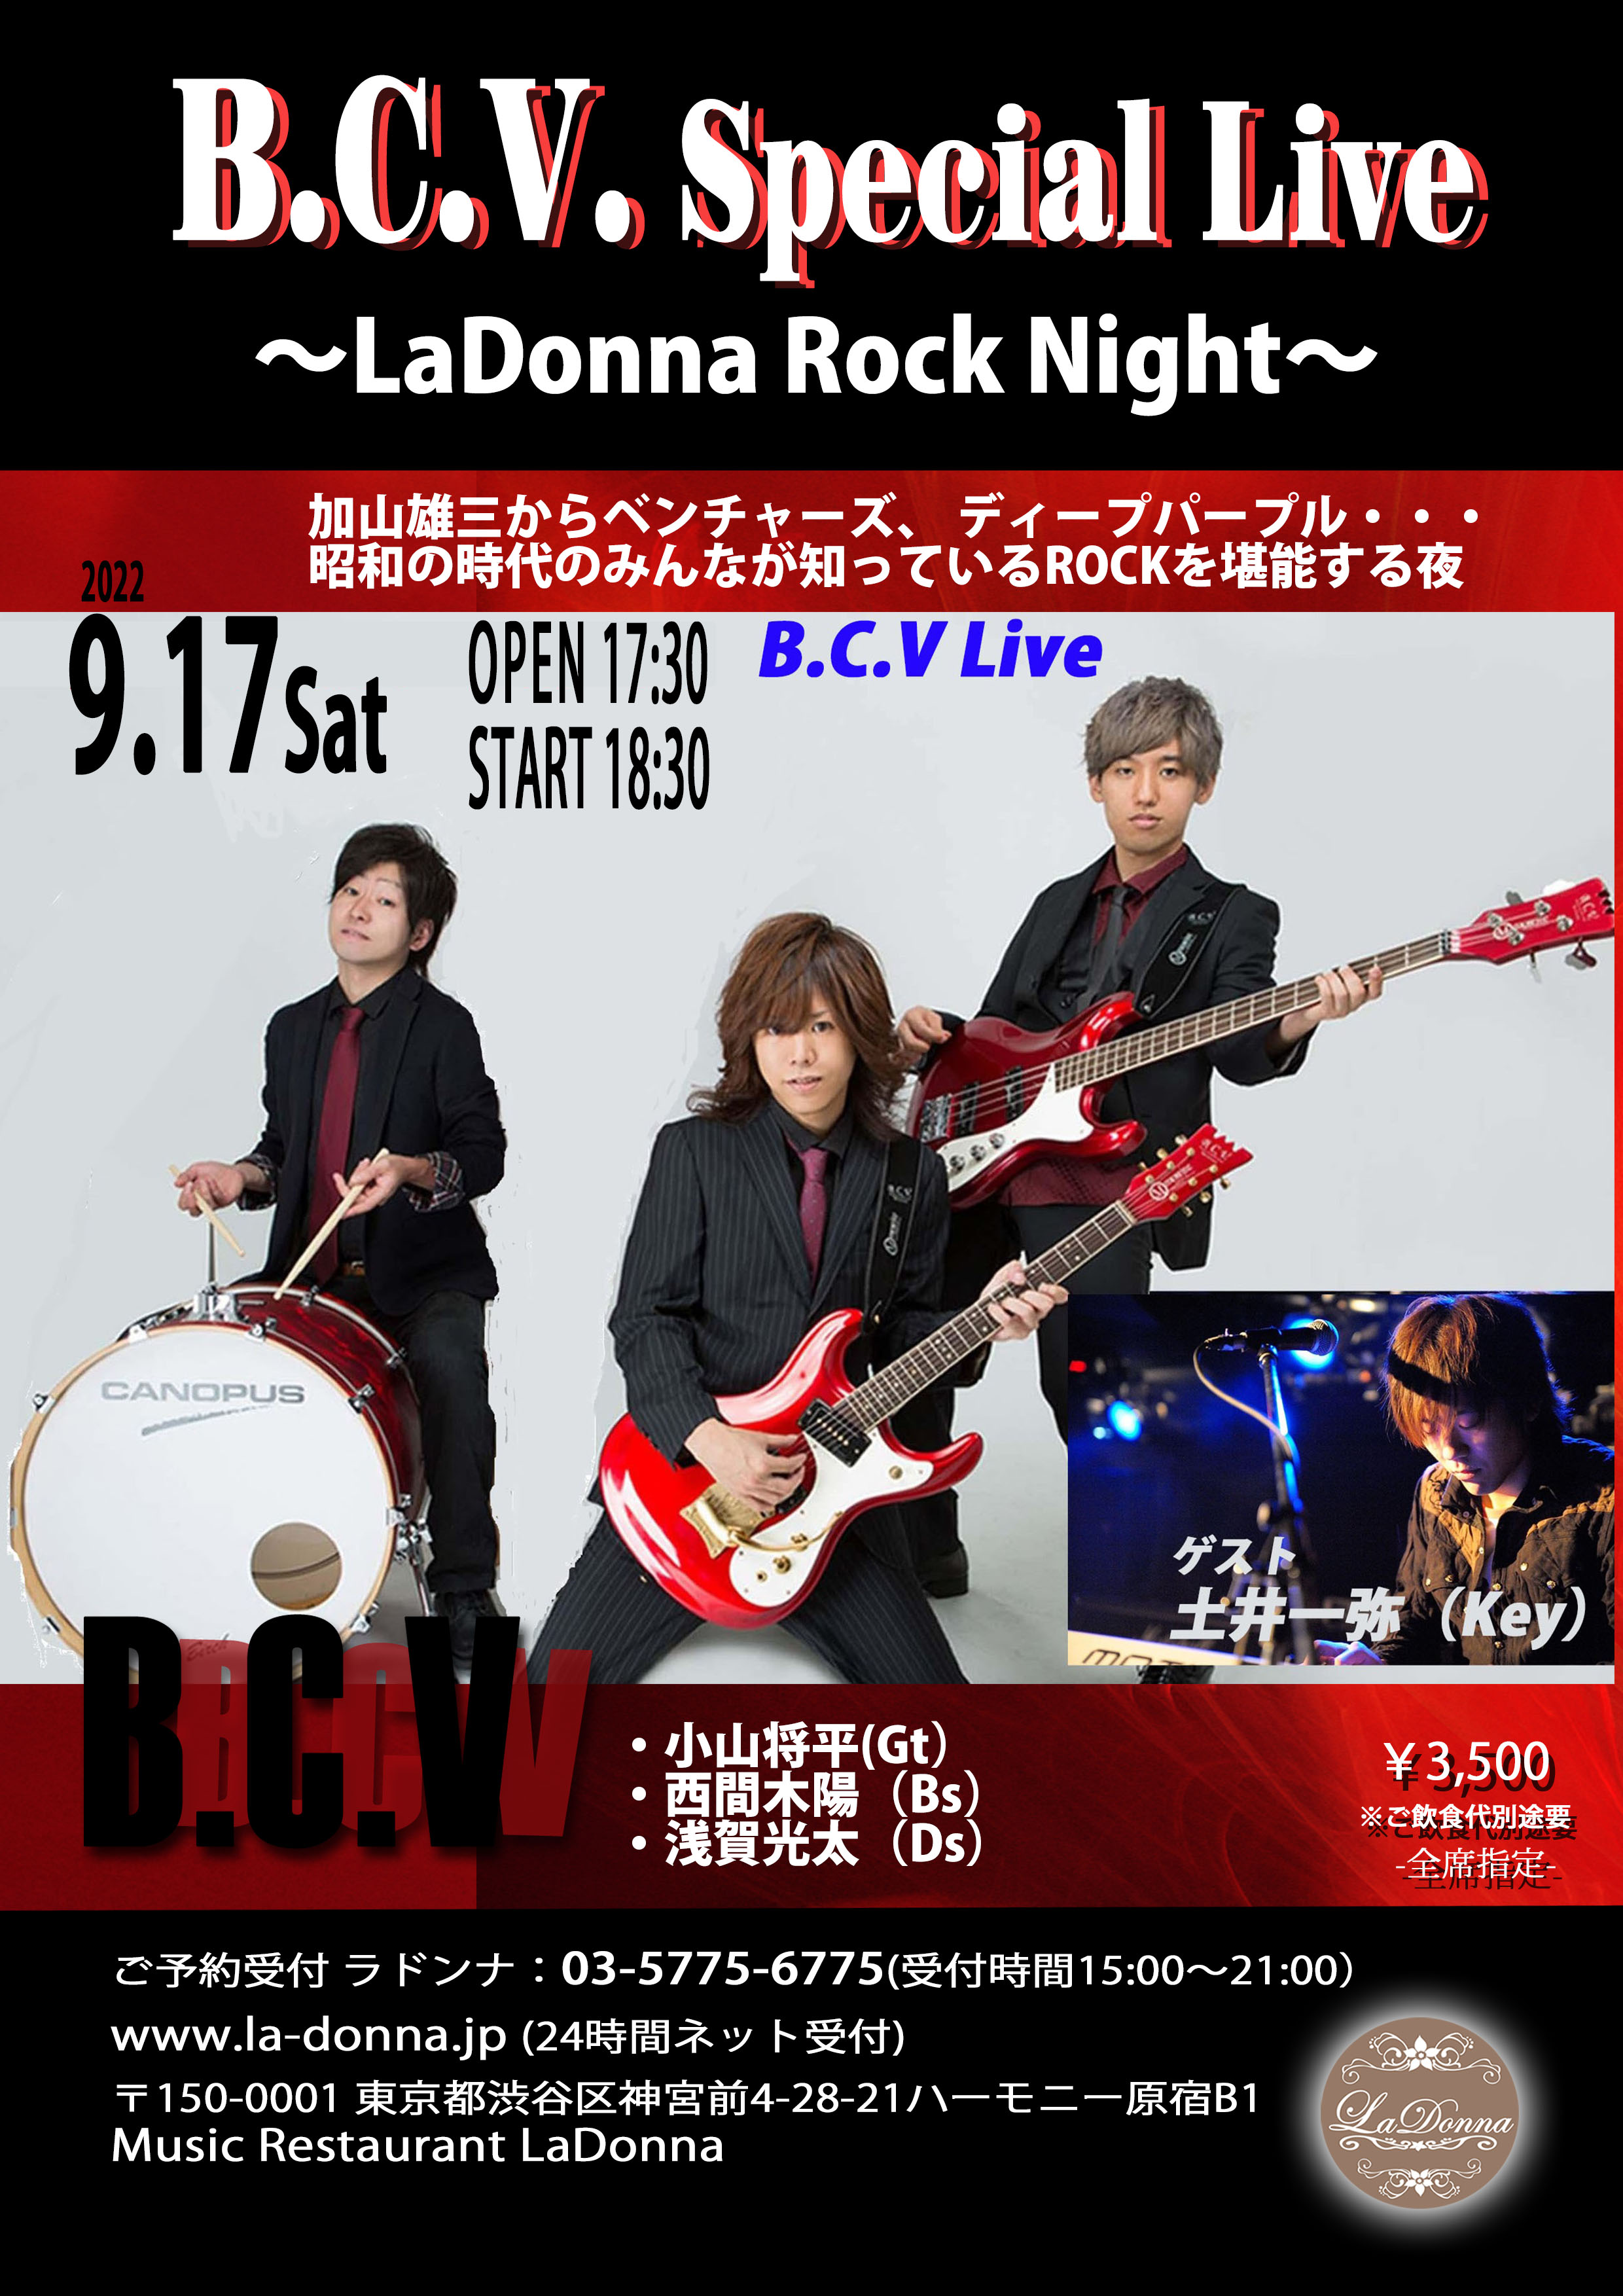 B.C.V.　Ｓpeciial Ｌive   ～LaDonna Rock Night～